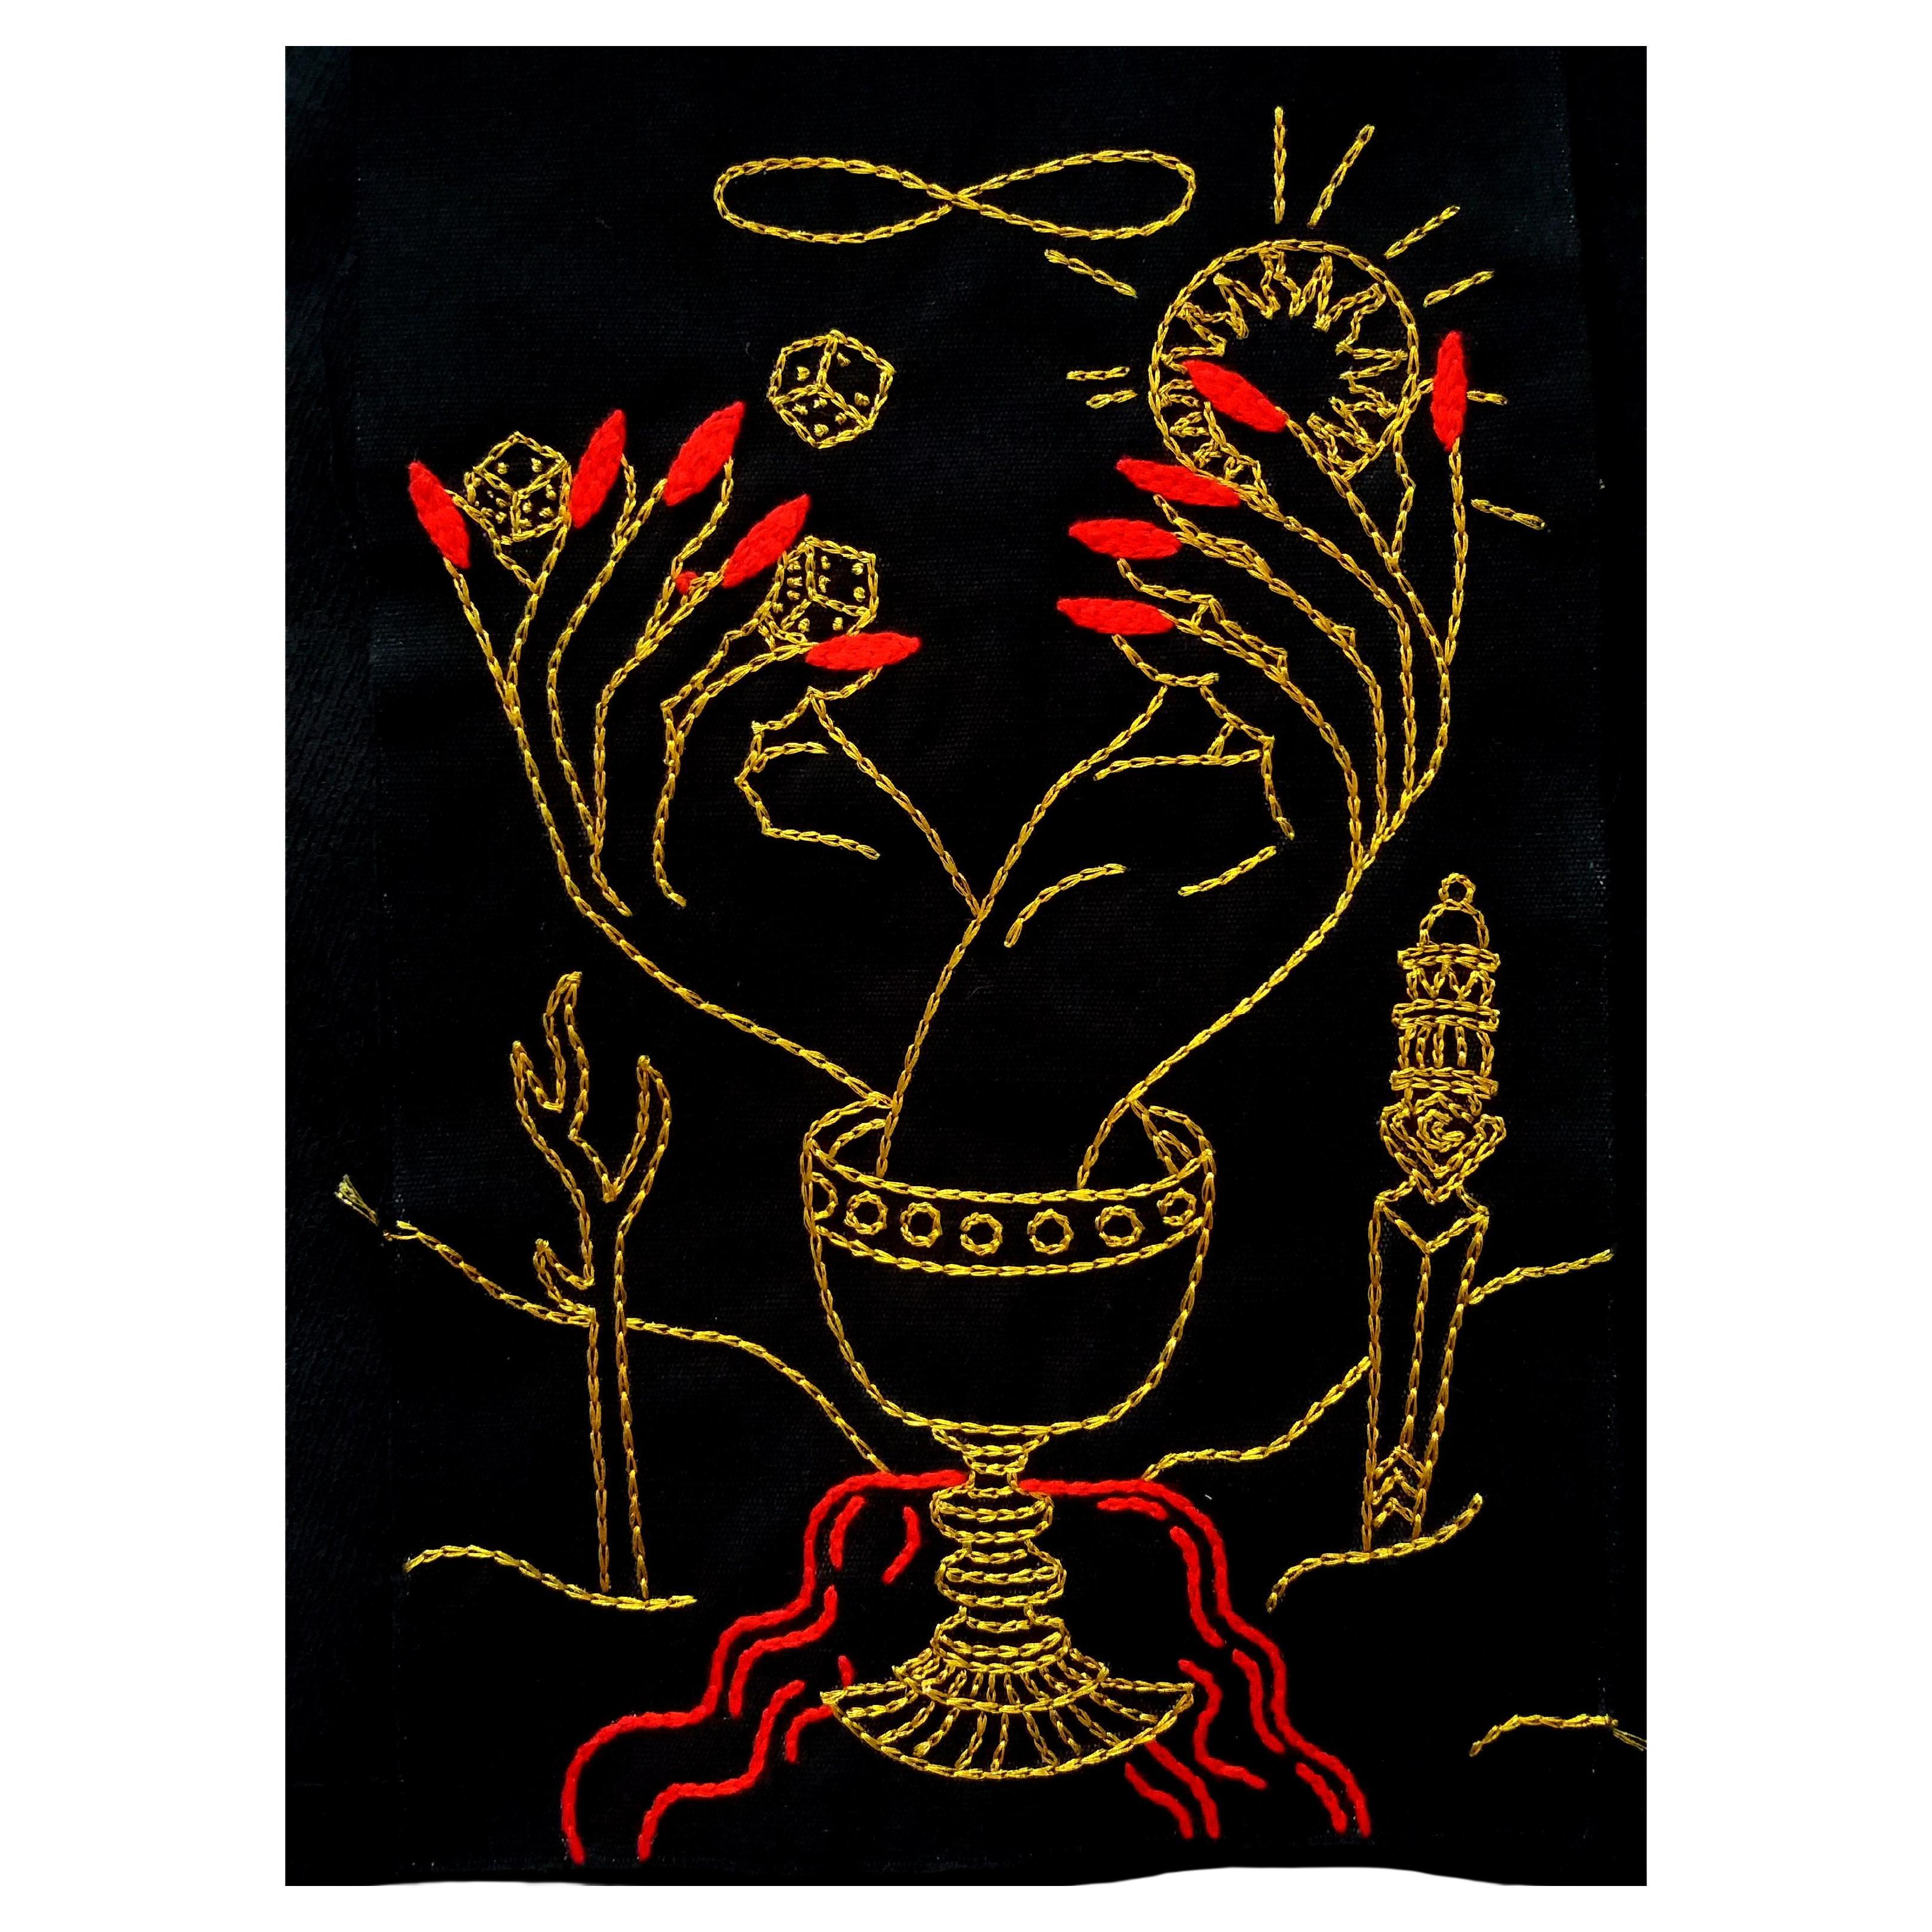 El Mago, 2019 by Maria Jose Franco Maldonado
From The Ventura Series. 
Embroidery thread on canvas
Image size: 27 cm H x 17 cm W
Frame size: 40 cm H x 30 cm W x 3 cm D
Unique

Blackwood frame with plexiglass
___
Maria Jose Franco Maldonado’s family